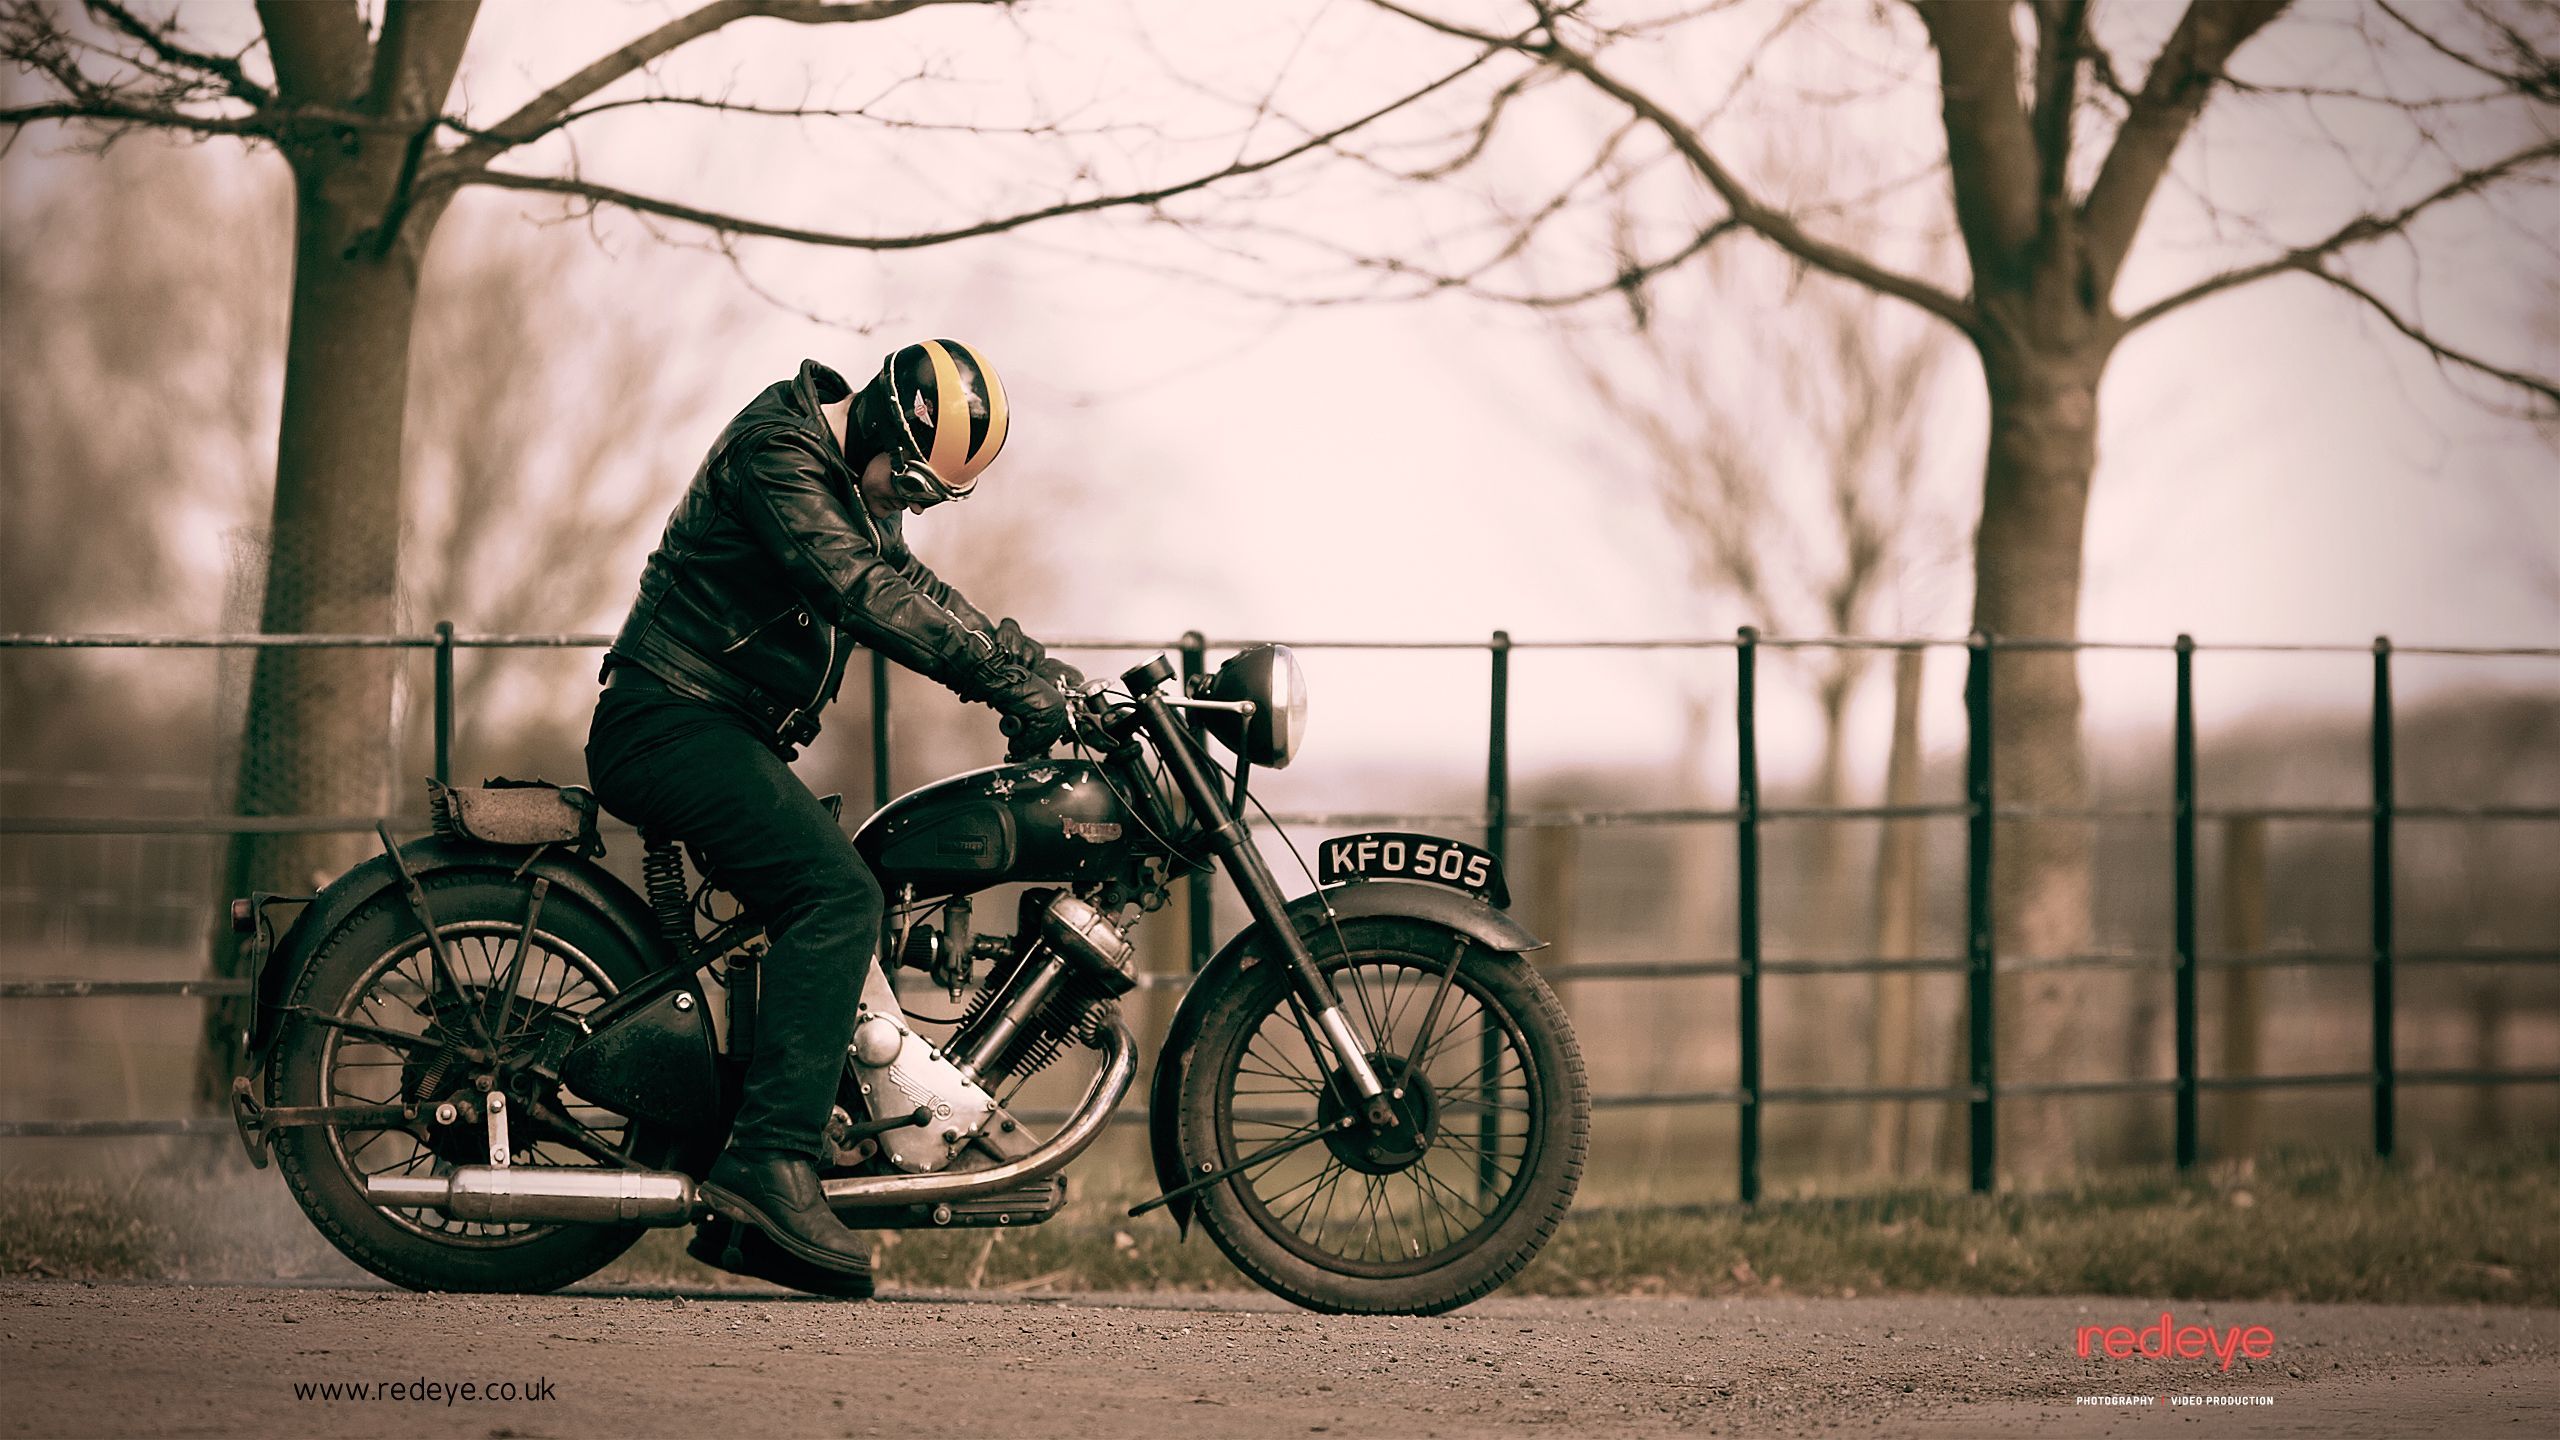 Classic Bike wallpaper. Motorcycle wallpaper, Classic bikes, Vintage motorcycle